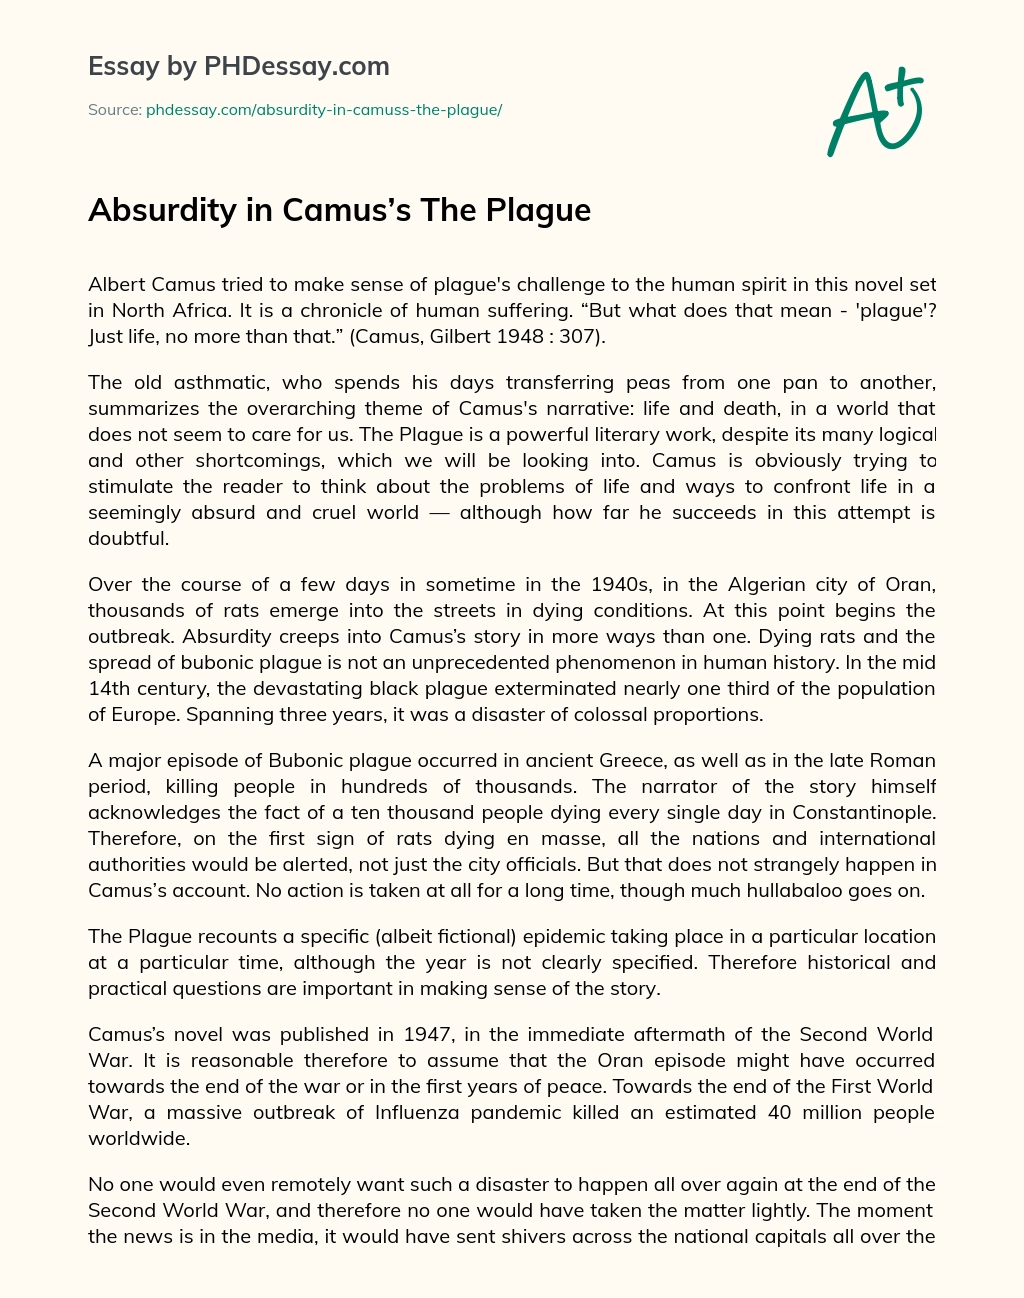 Absurdity in Camus’s The Plague essay